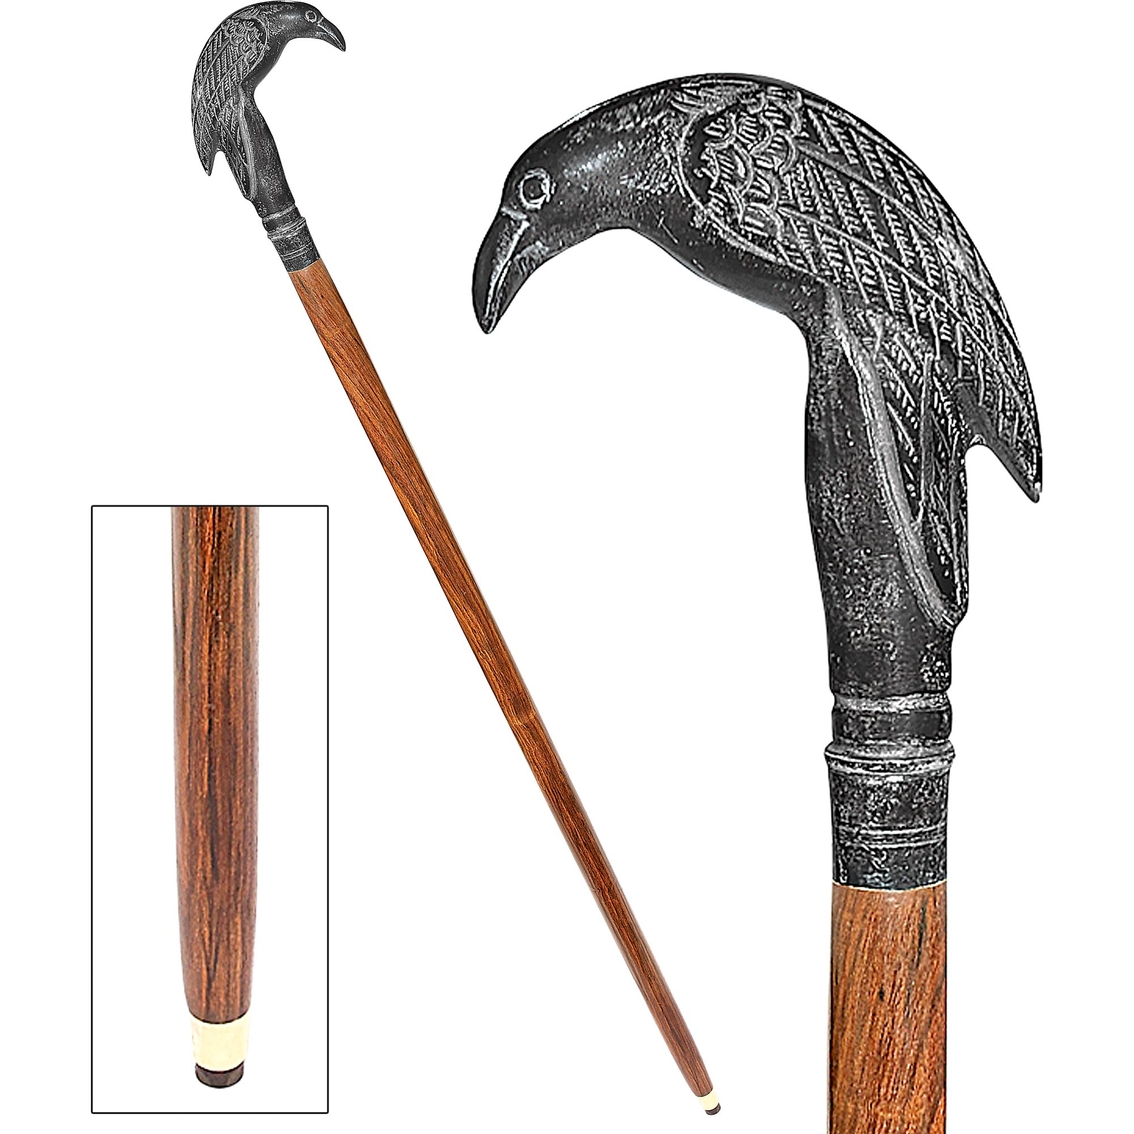 Design Toscano Poe's Mystic Raven Solid Hardwood Walking Stick - Image 2 of 2